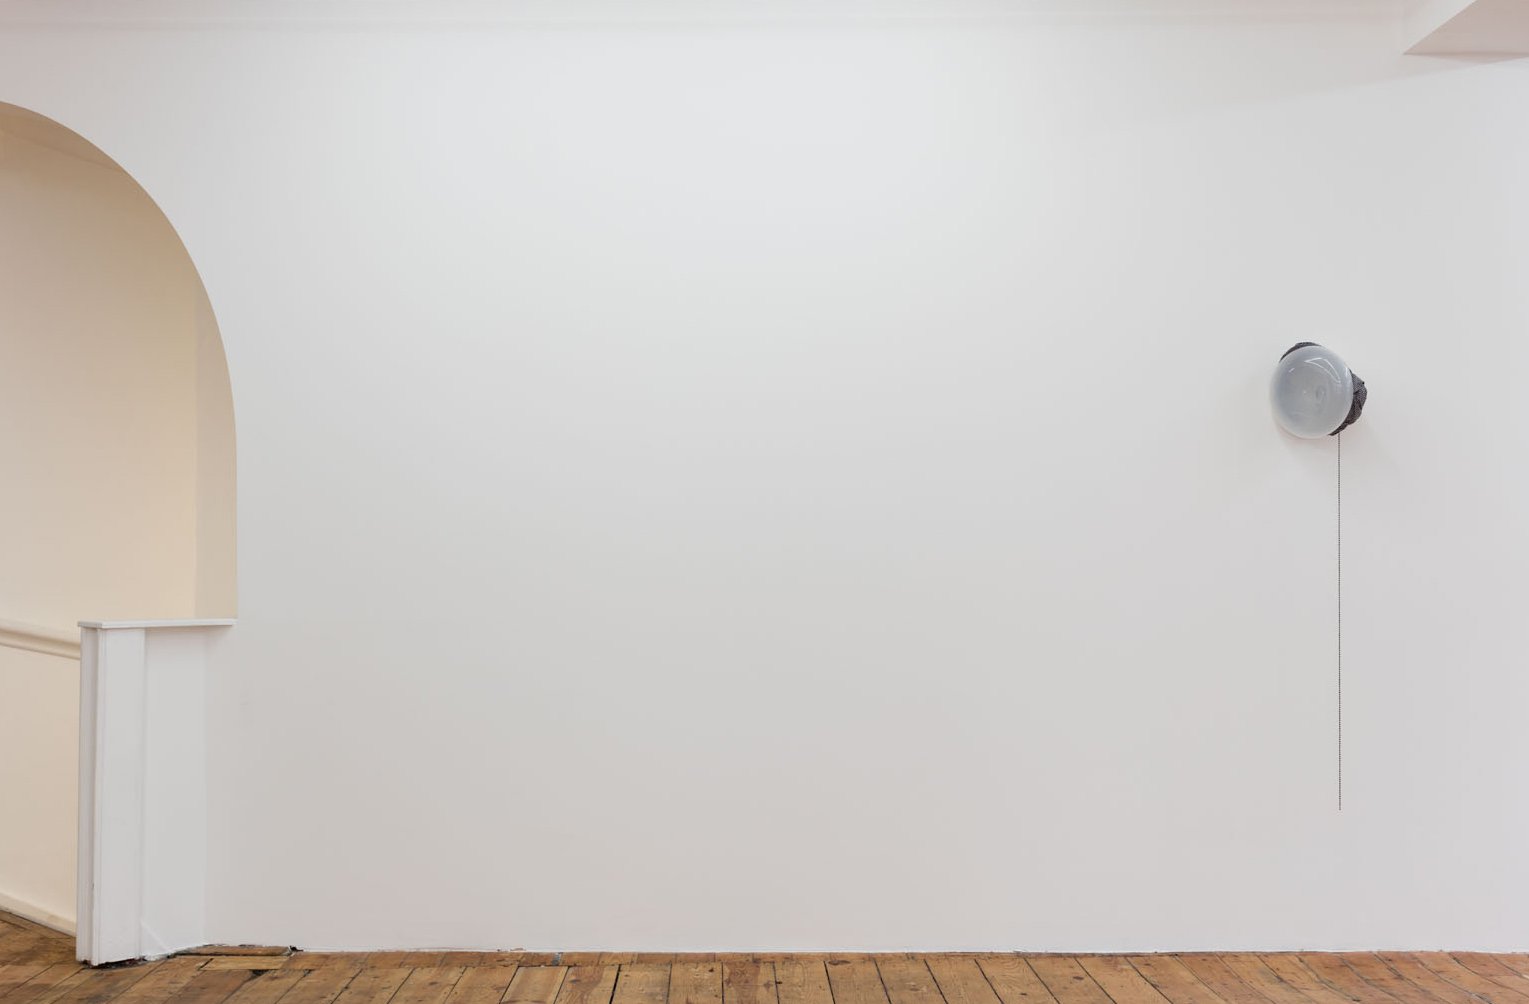 David Douard, WE (purple and gold pain), blown glass, aluminum, copper, plaster, dish towel, chain, 42 x 27 x 24 cm (16 1/2 x 10 5/8 x 9 1/2 in), 2015